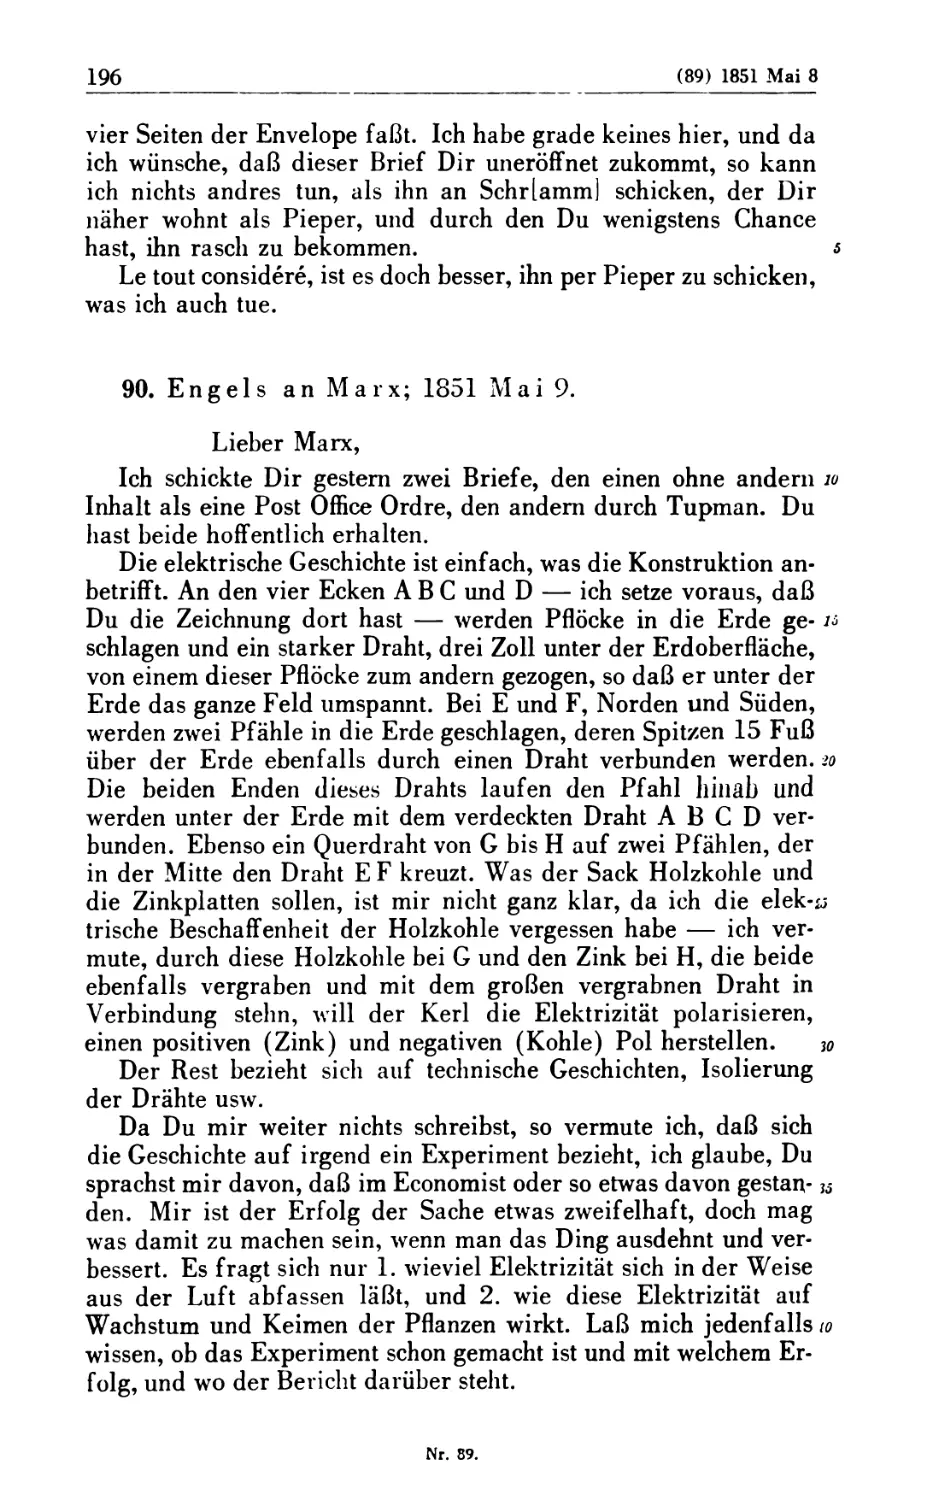 90. Engels an Marx; 1851 Mai 9